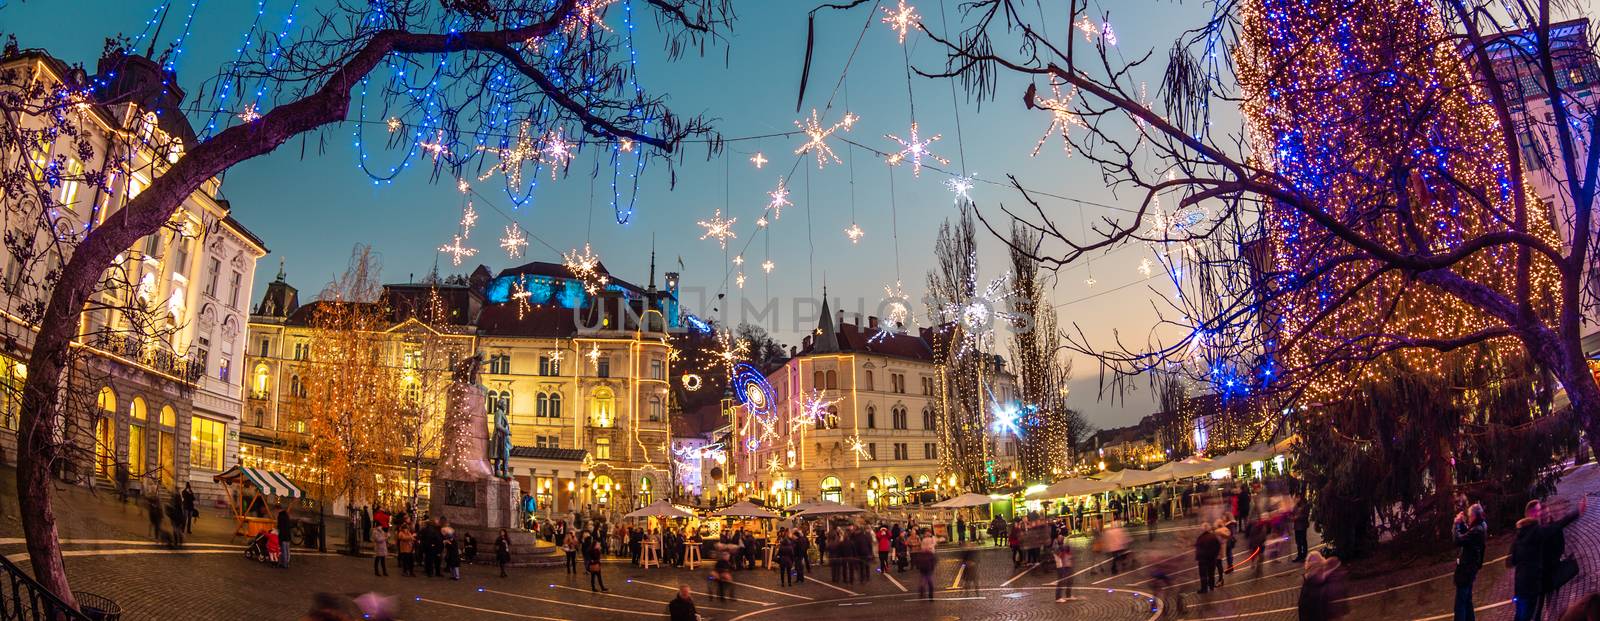 Romantic Ljubljana's city center decorated for Christmas holidays. Preseren's square, Ljubljana, Slovenia, Europe.